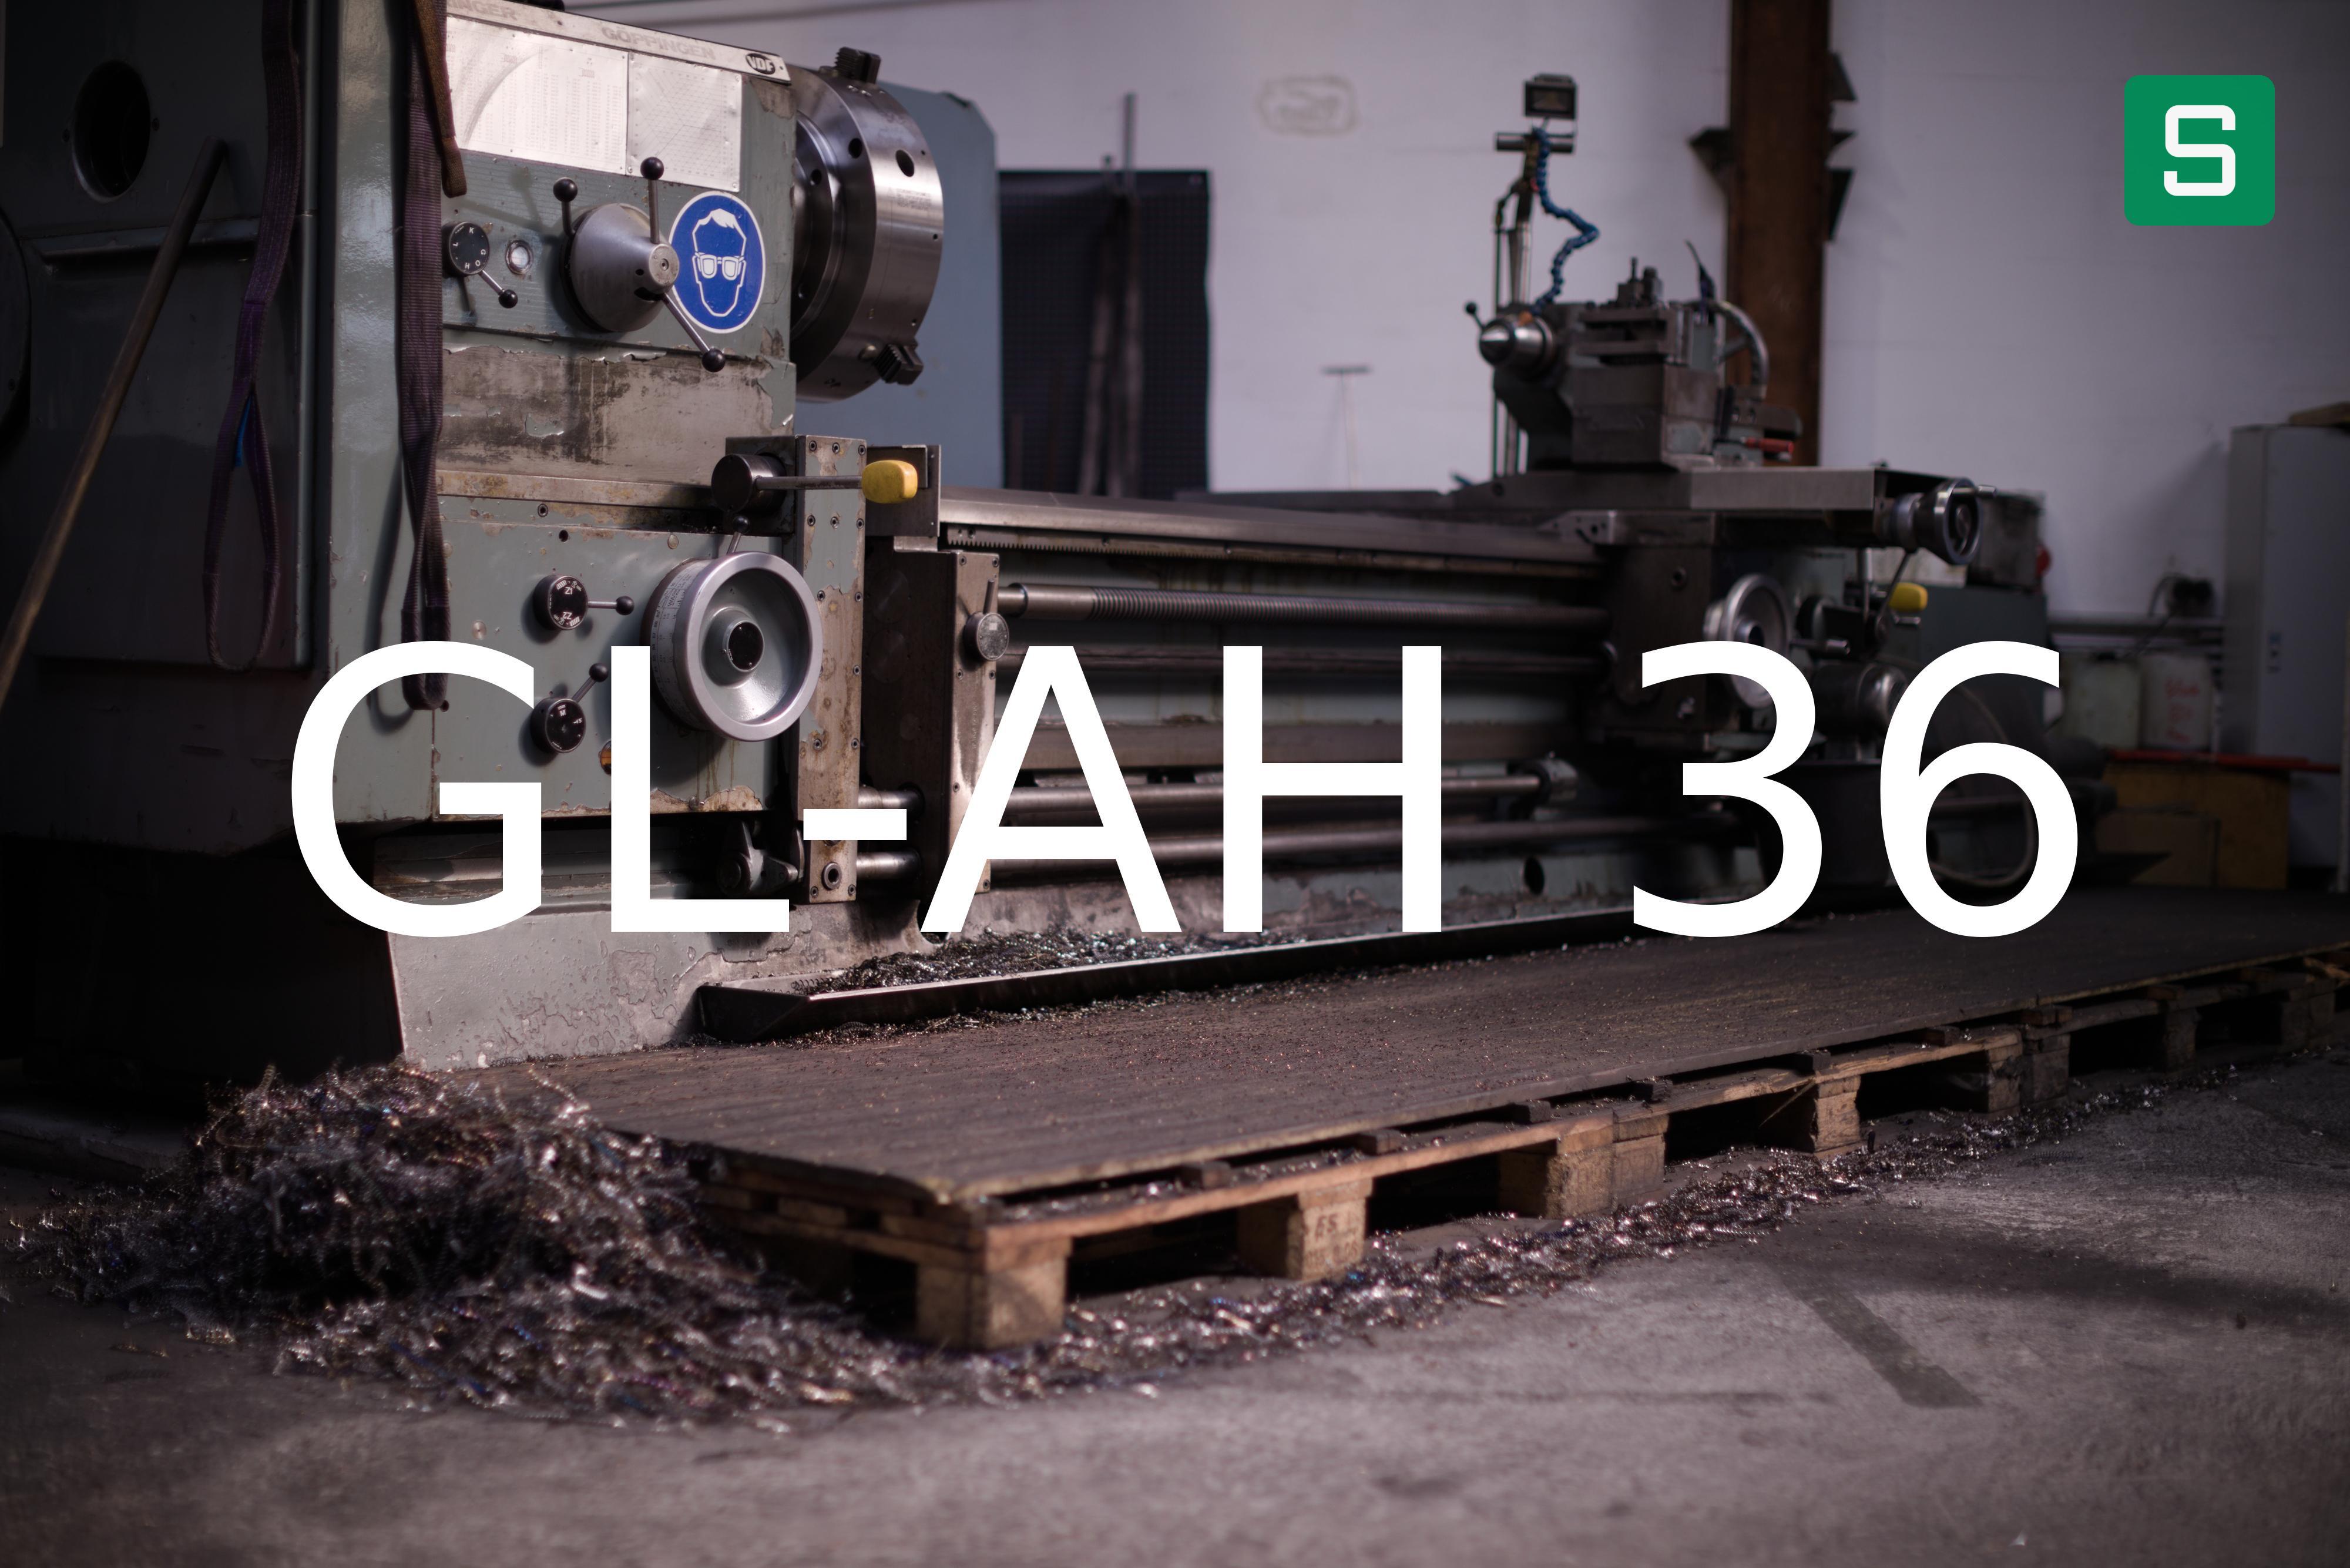 Steel Material: GL-AH 36